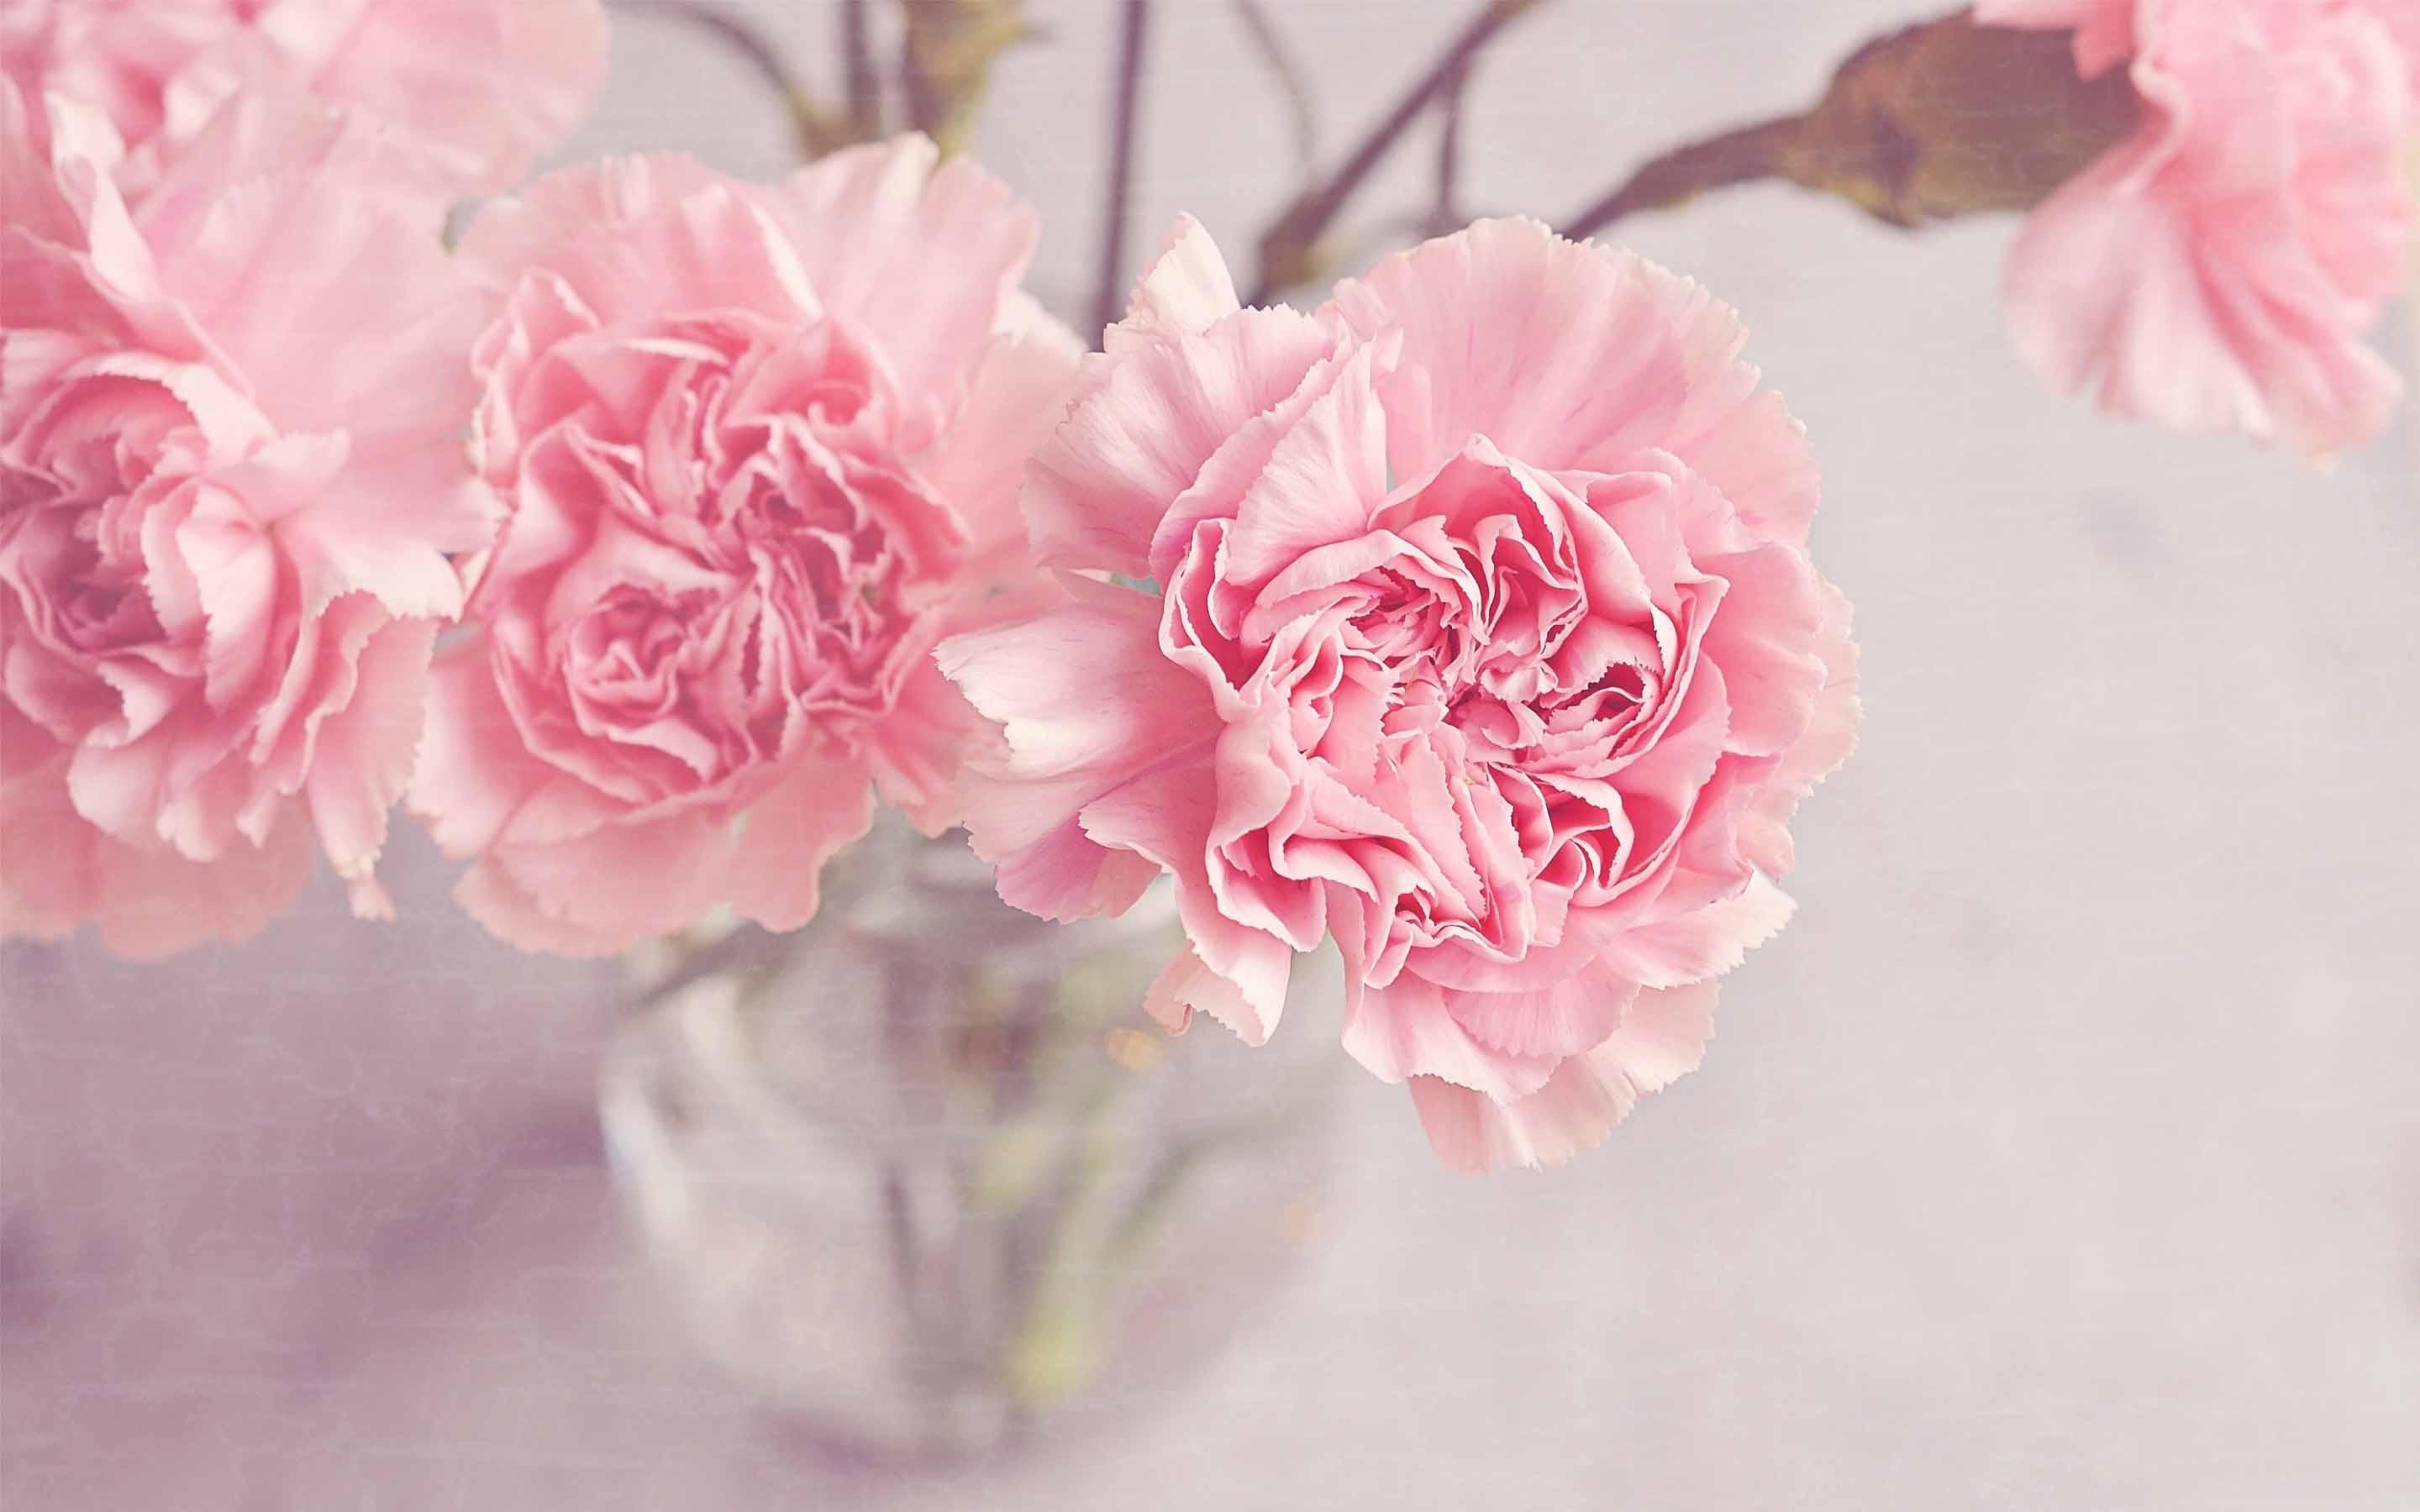 Light Pink Carnation Flowers MacBook Pro Wallpaper Download